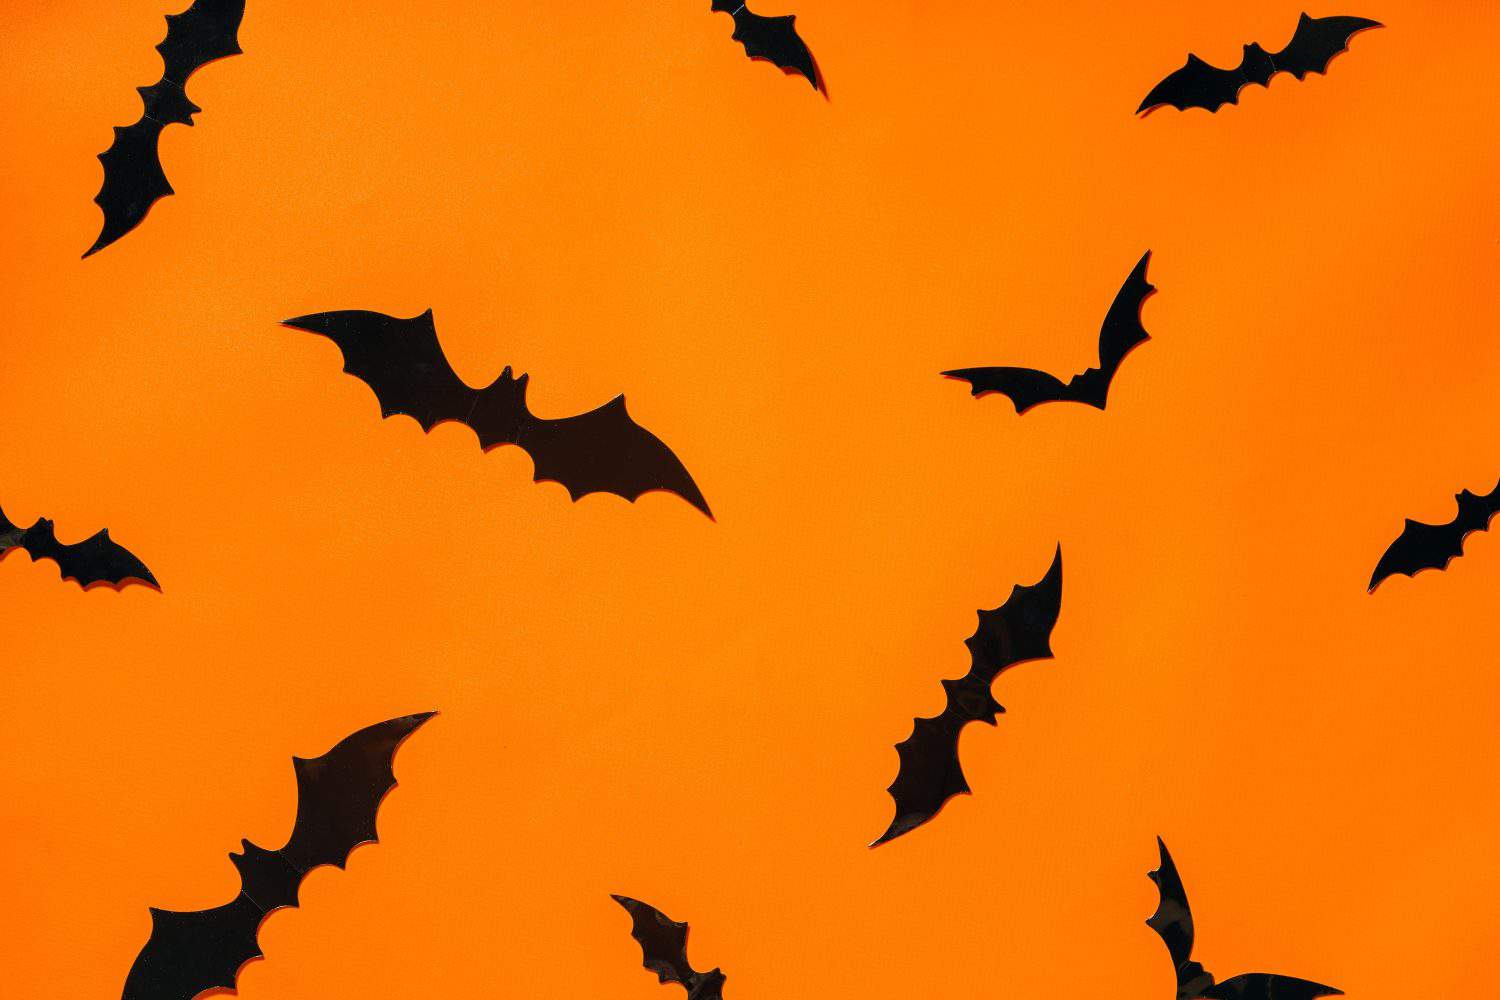 Halloween Background: Flying Bats on Orange